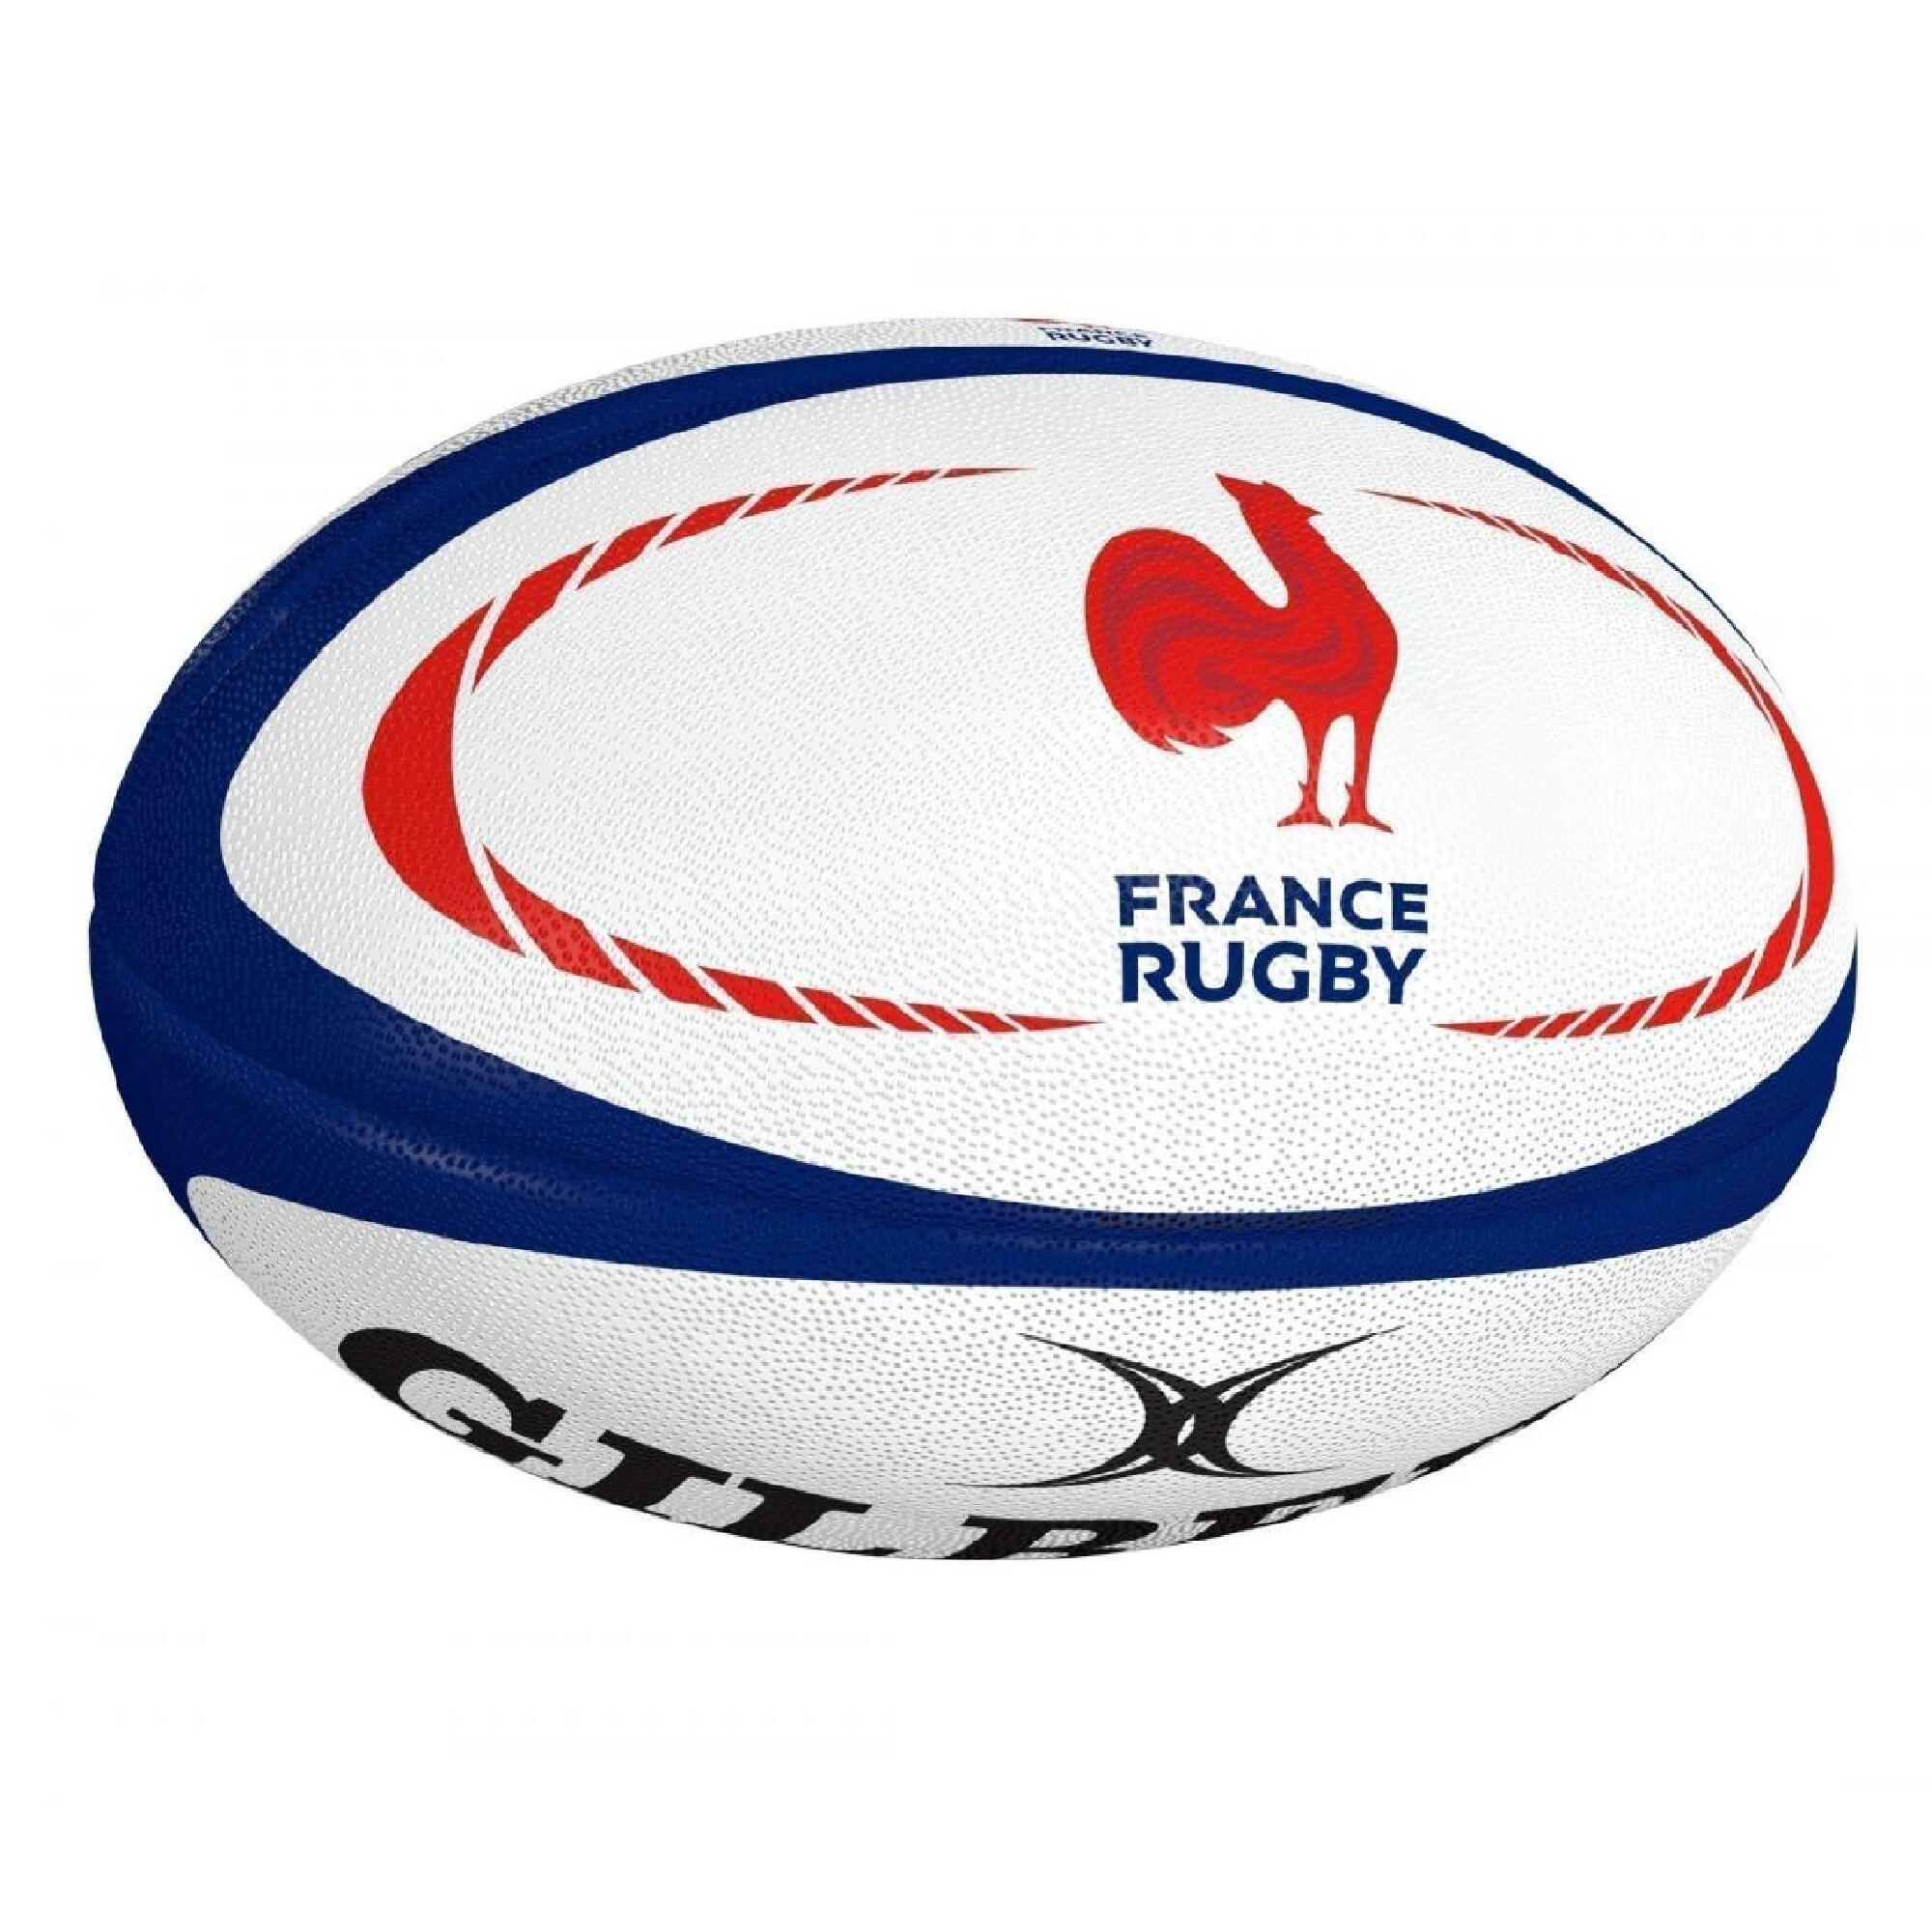 Minge Rugby Gilbert Replica France Mărimea 5 alb-albastru-roșu La Oferta Online decathlon imagine La Oferta Online